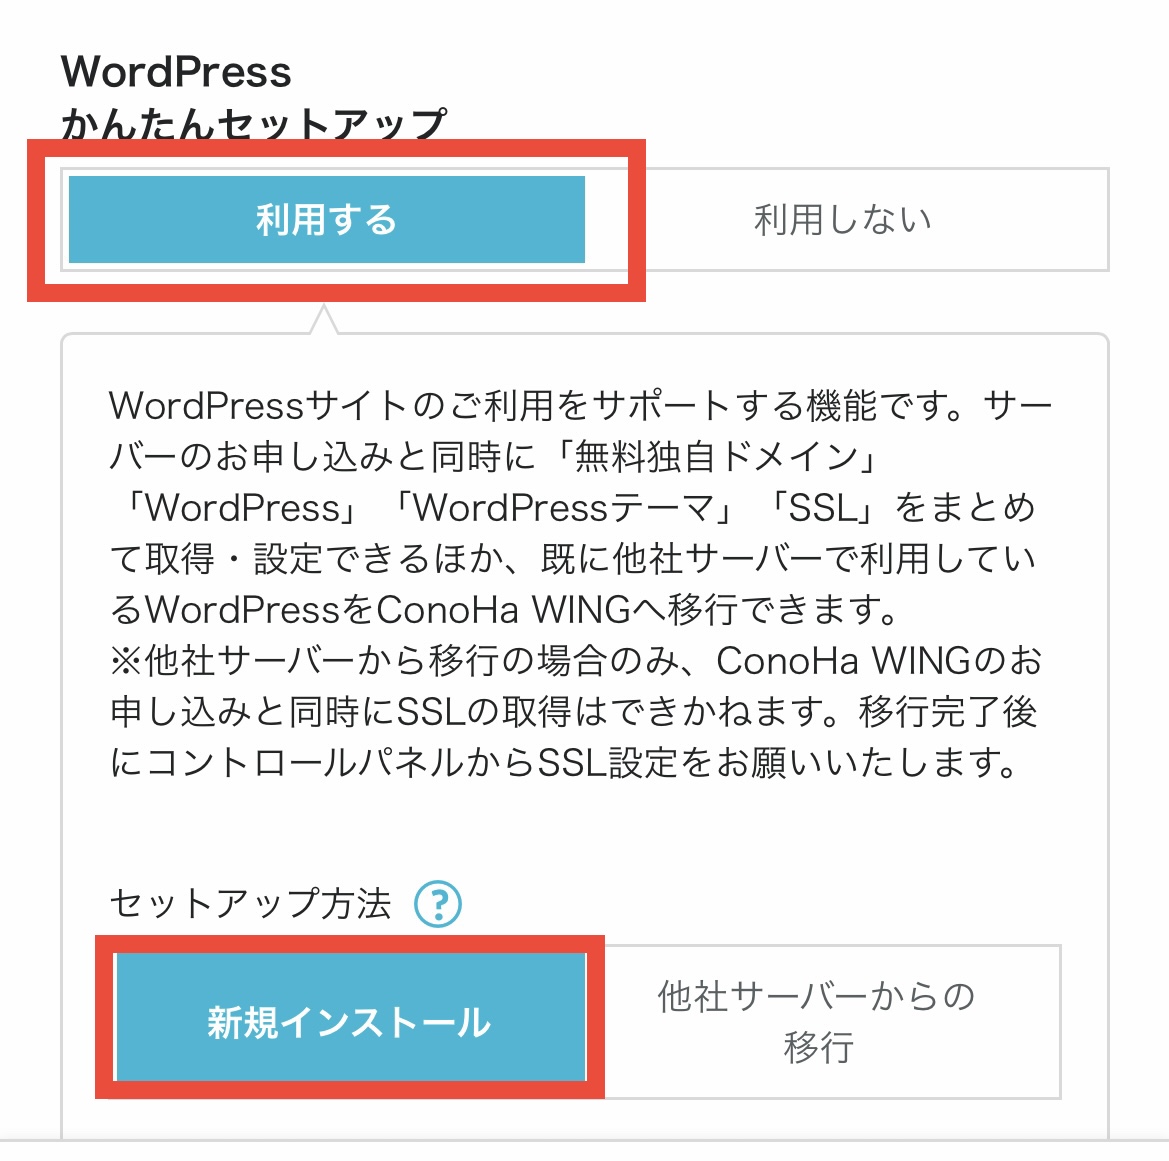 WordPress簡単セットアップ